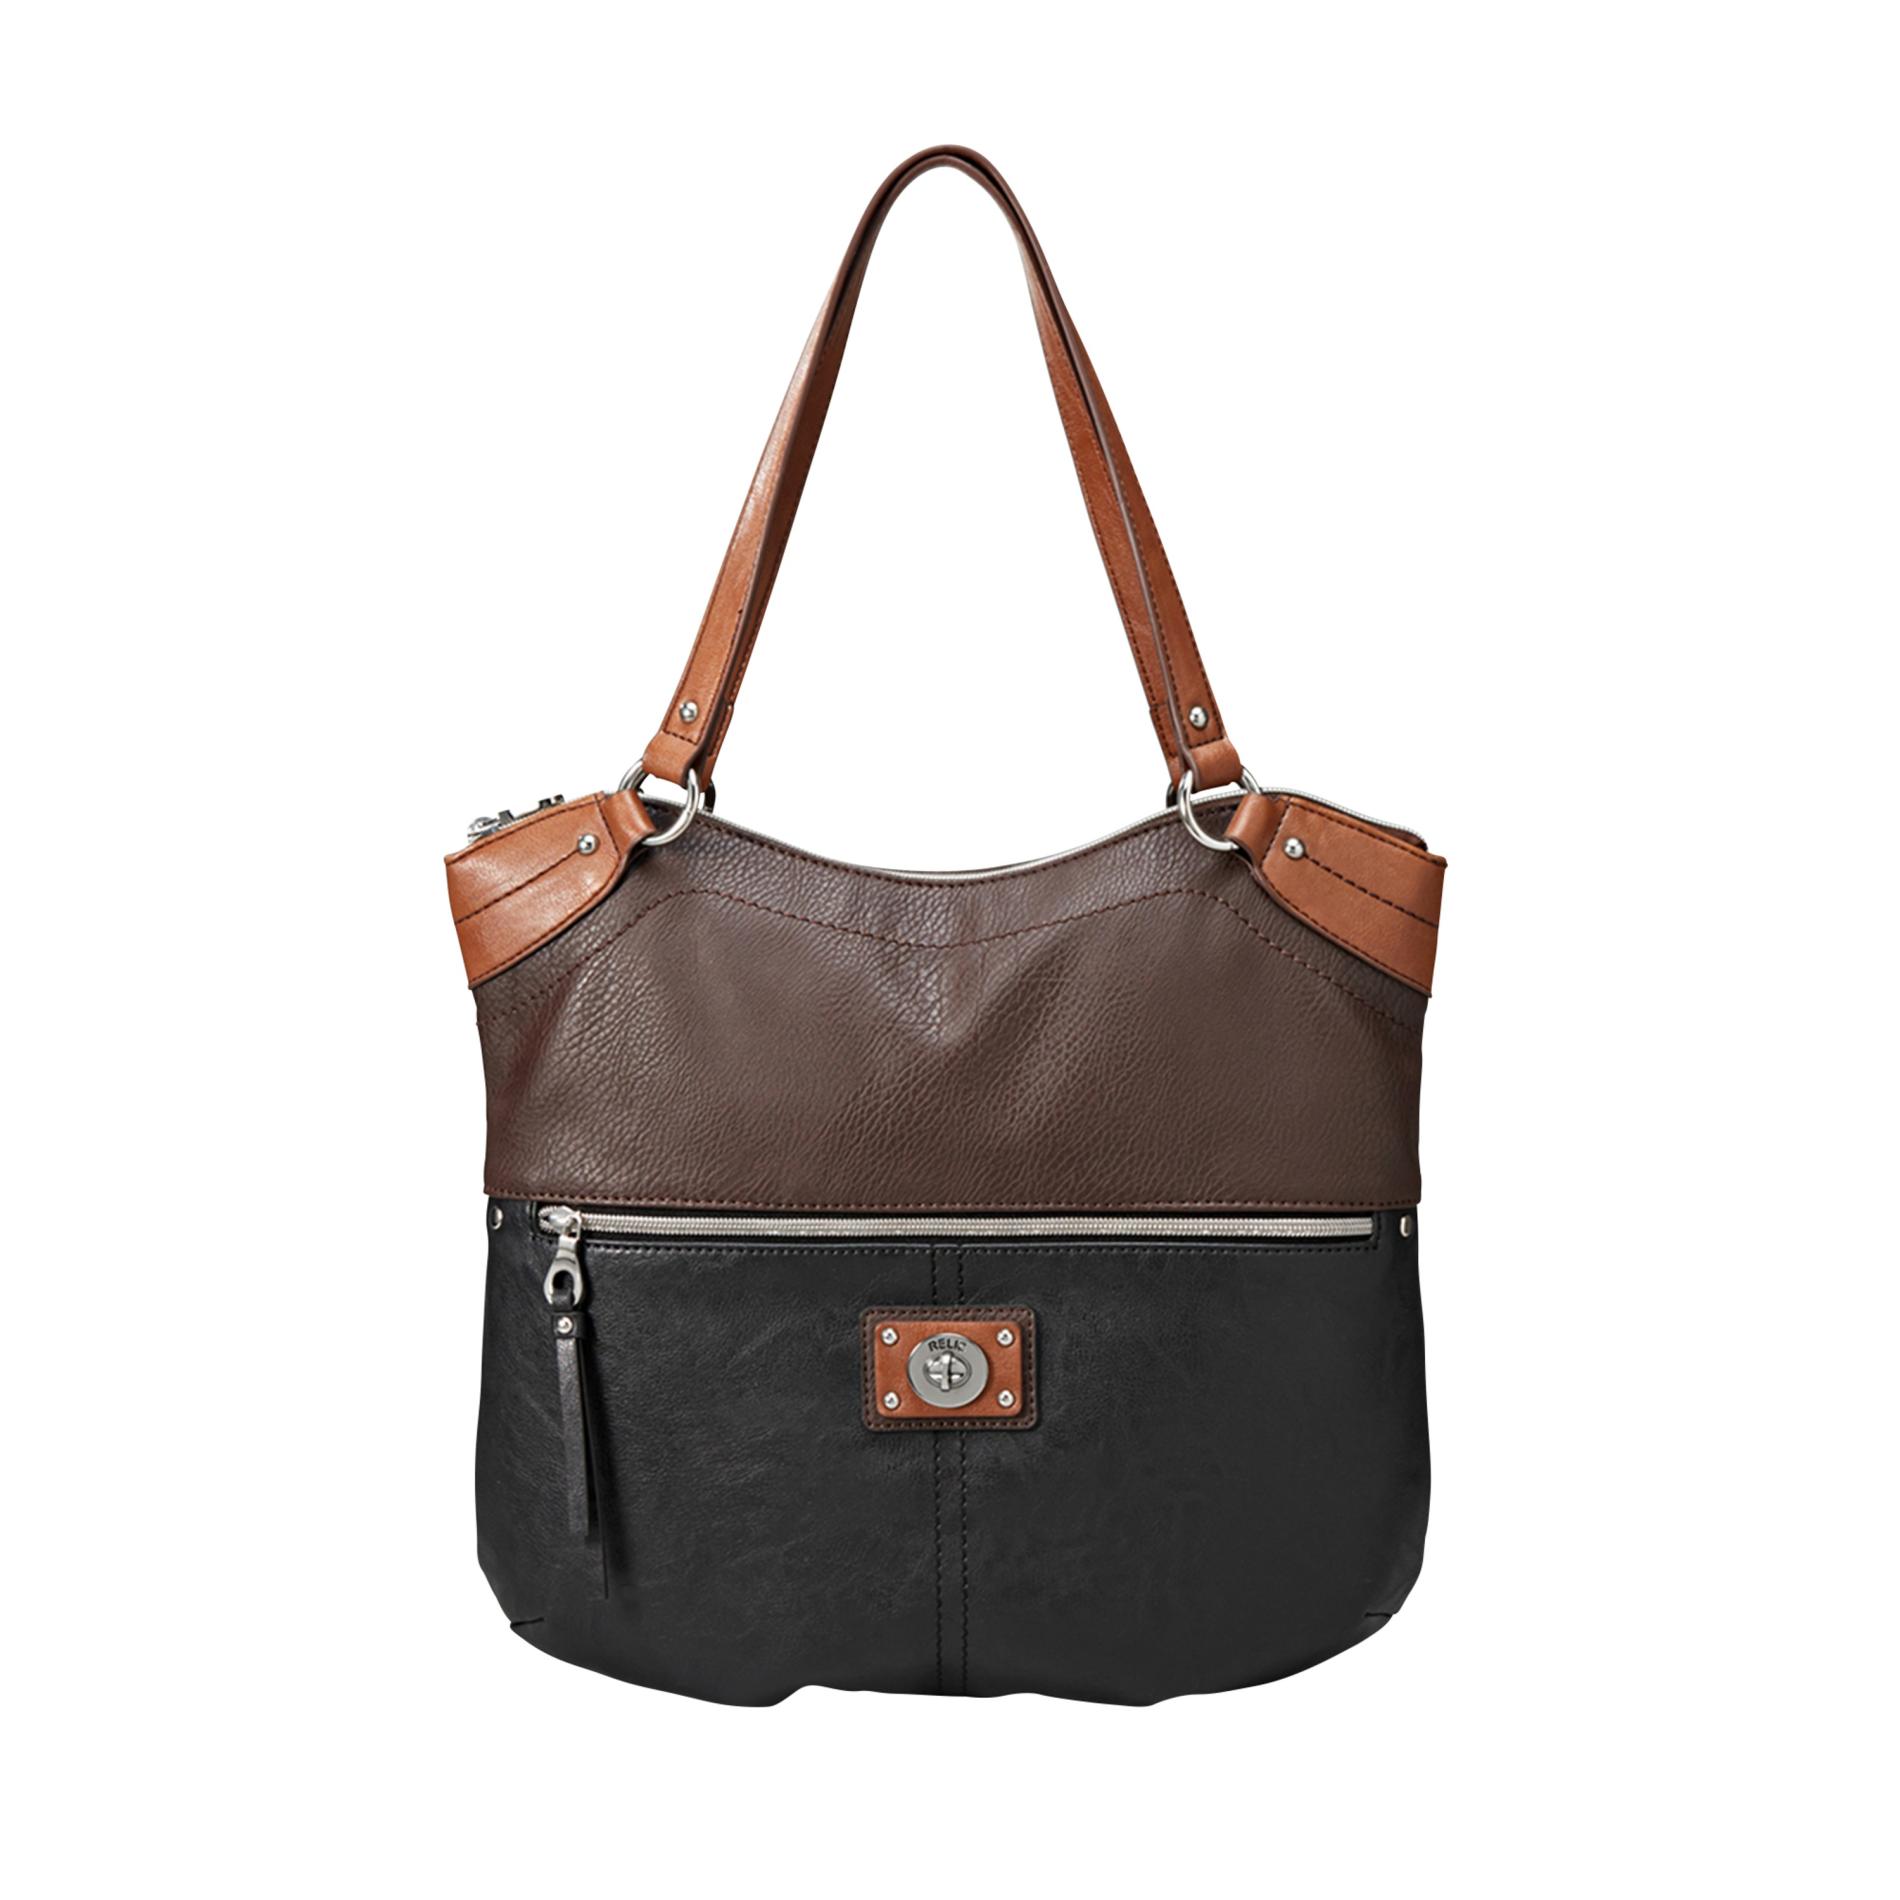 Relic Women's Prescott Shopper Handbag